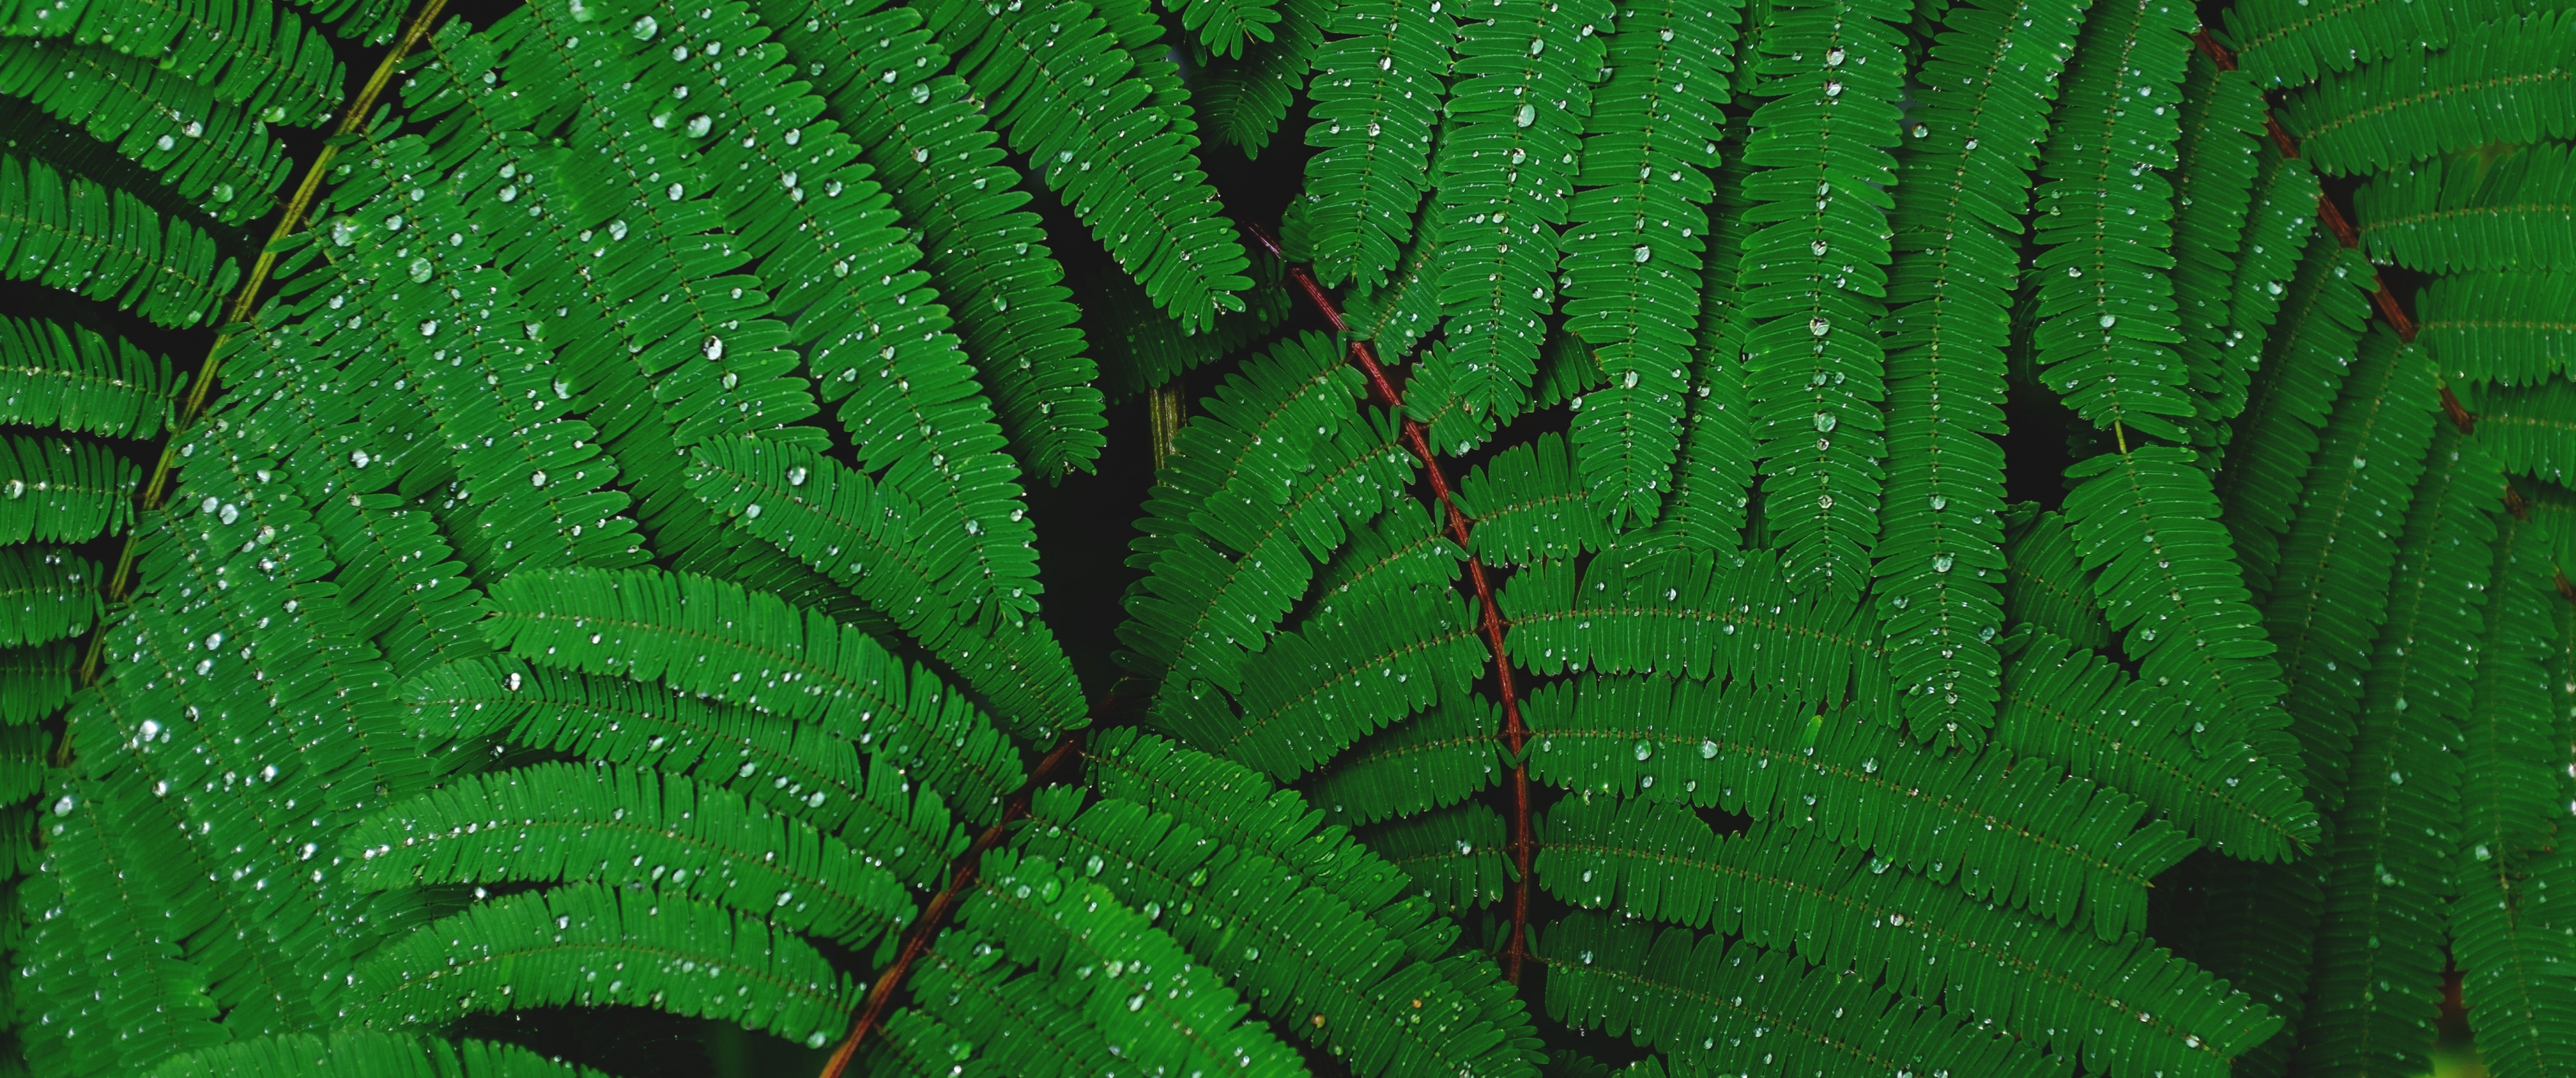 Plant Wallpaper 4K, Leaves, Branches, Rain droplets, #1348